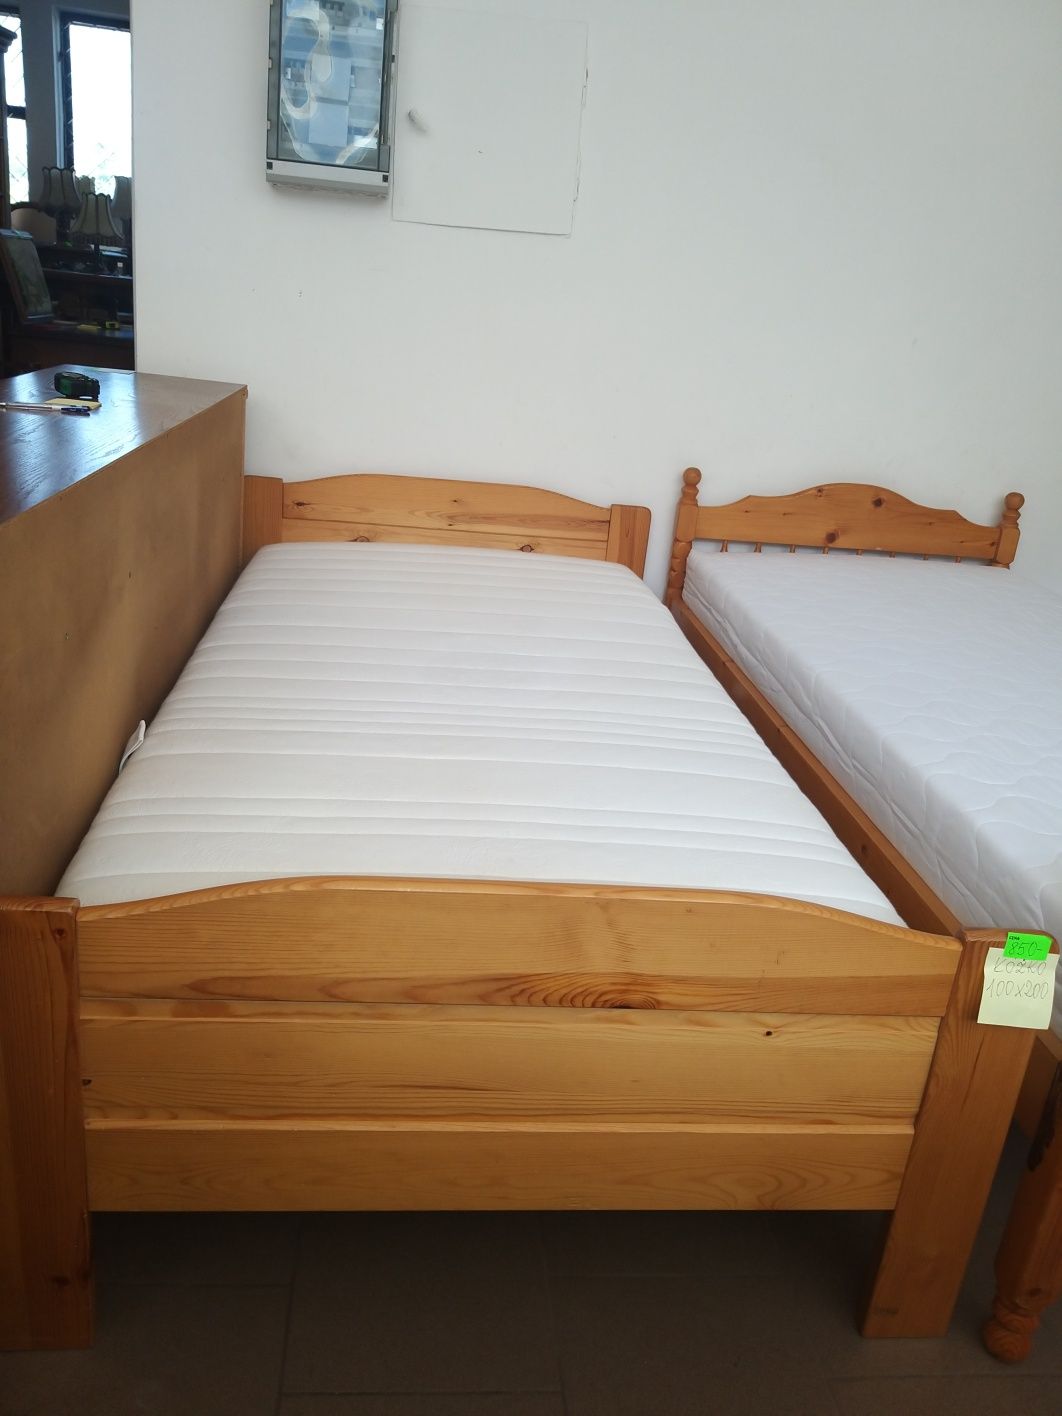 Łóżko sosnowe 100x200 cm solidne kompletne